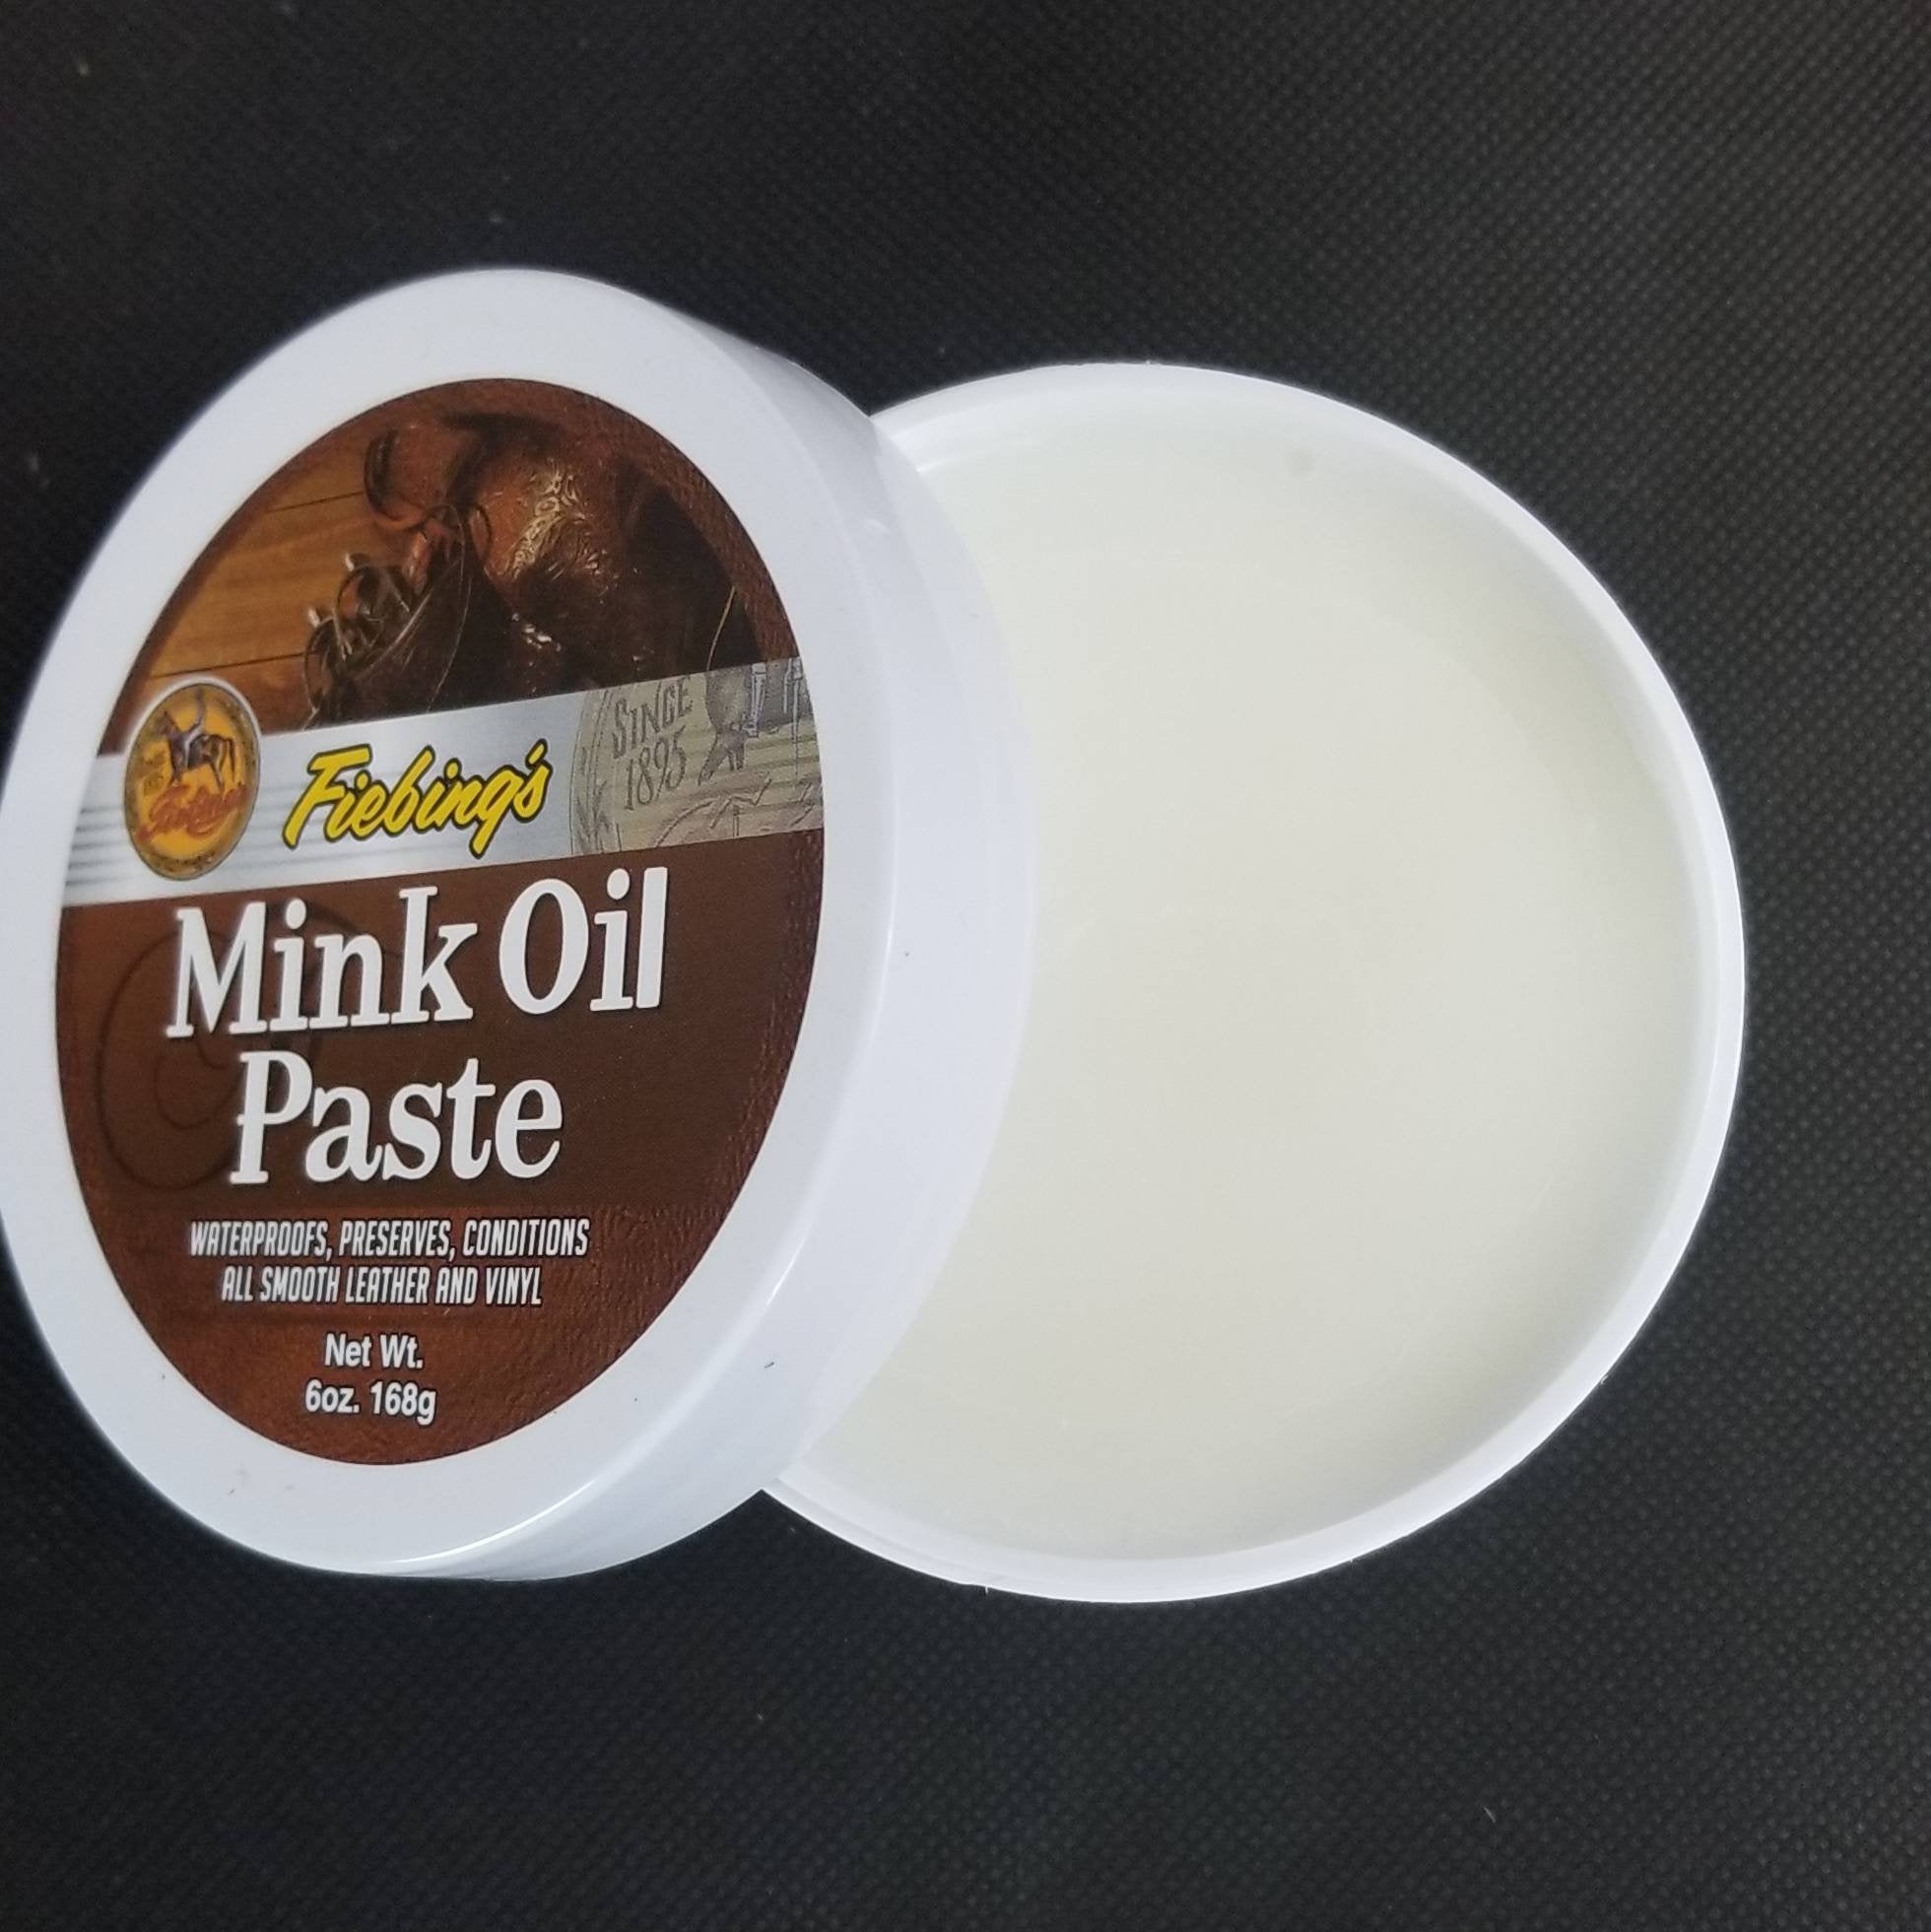 Open tub of Fiebing's mink oil paste shows white paste